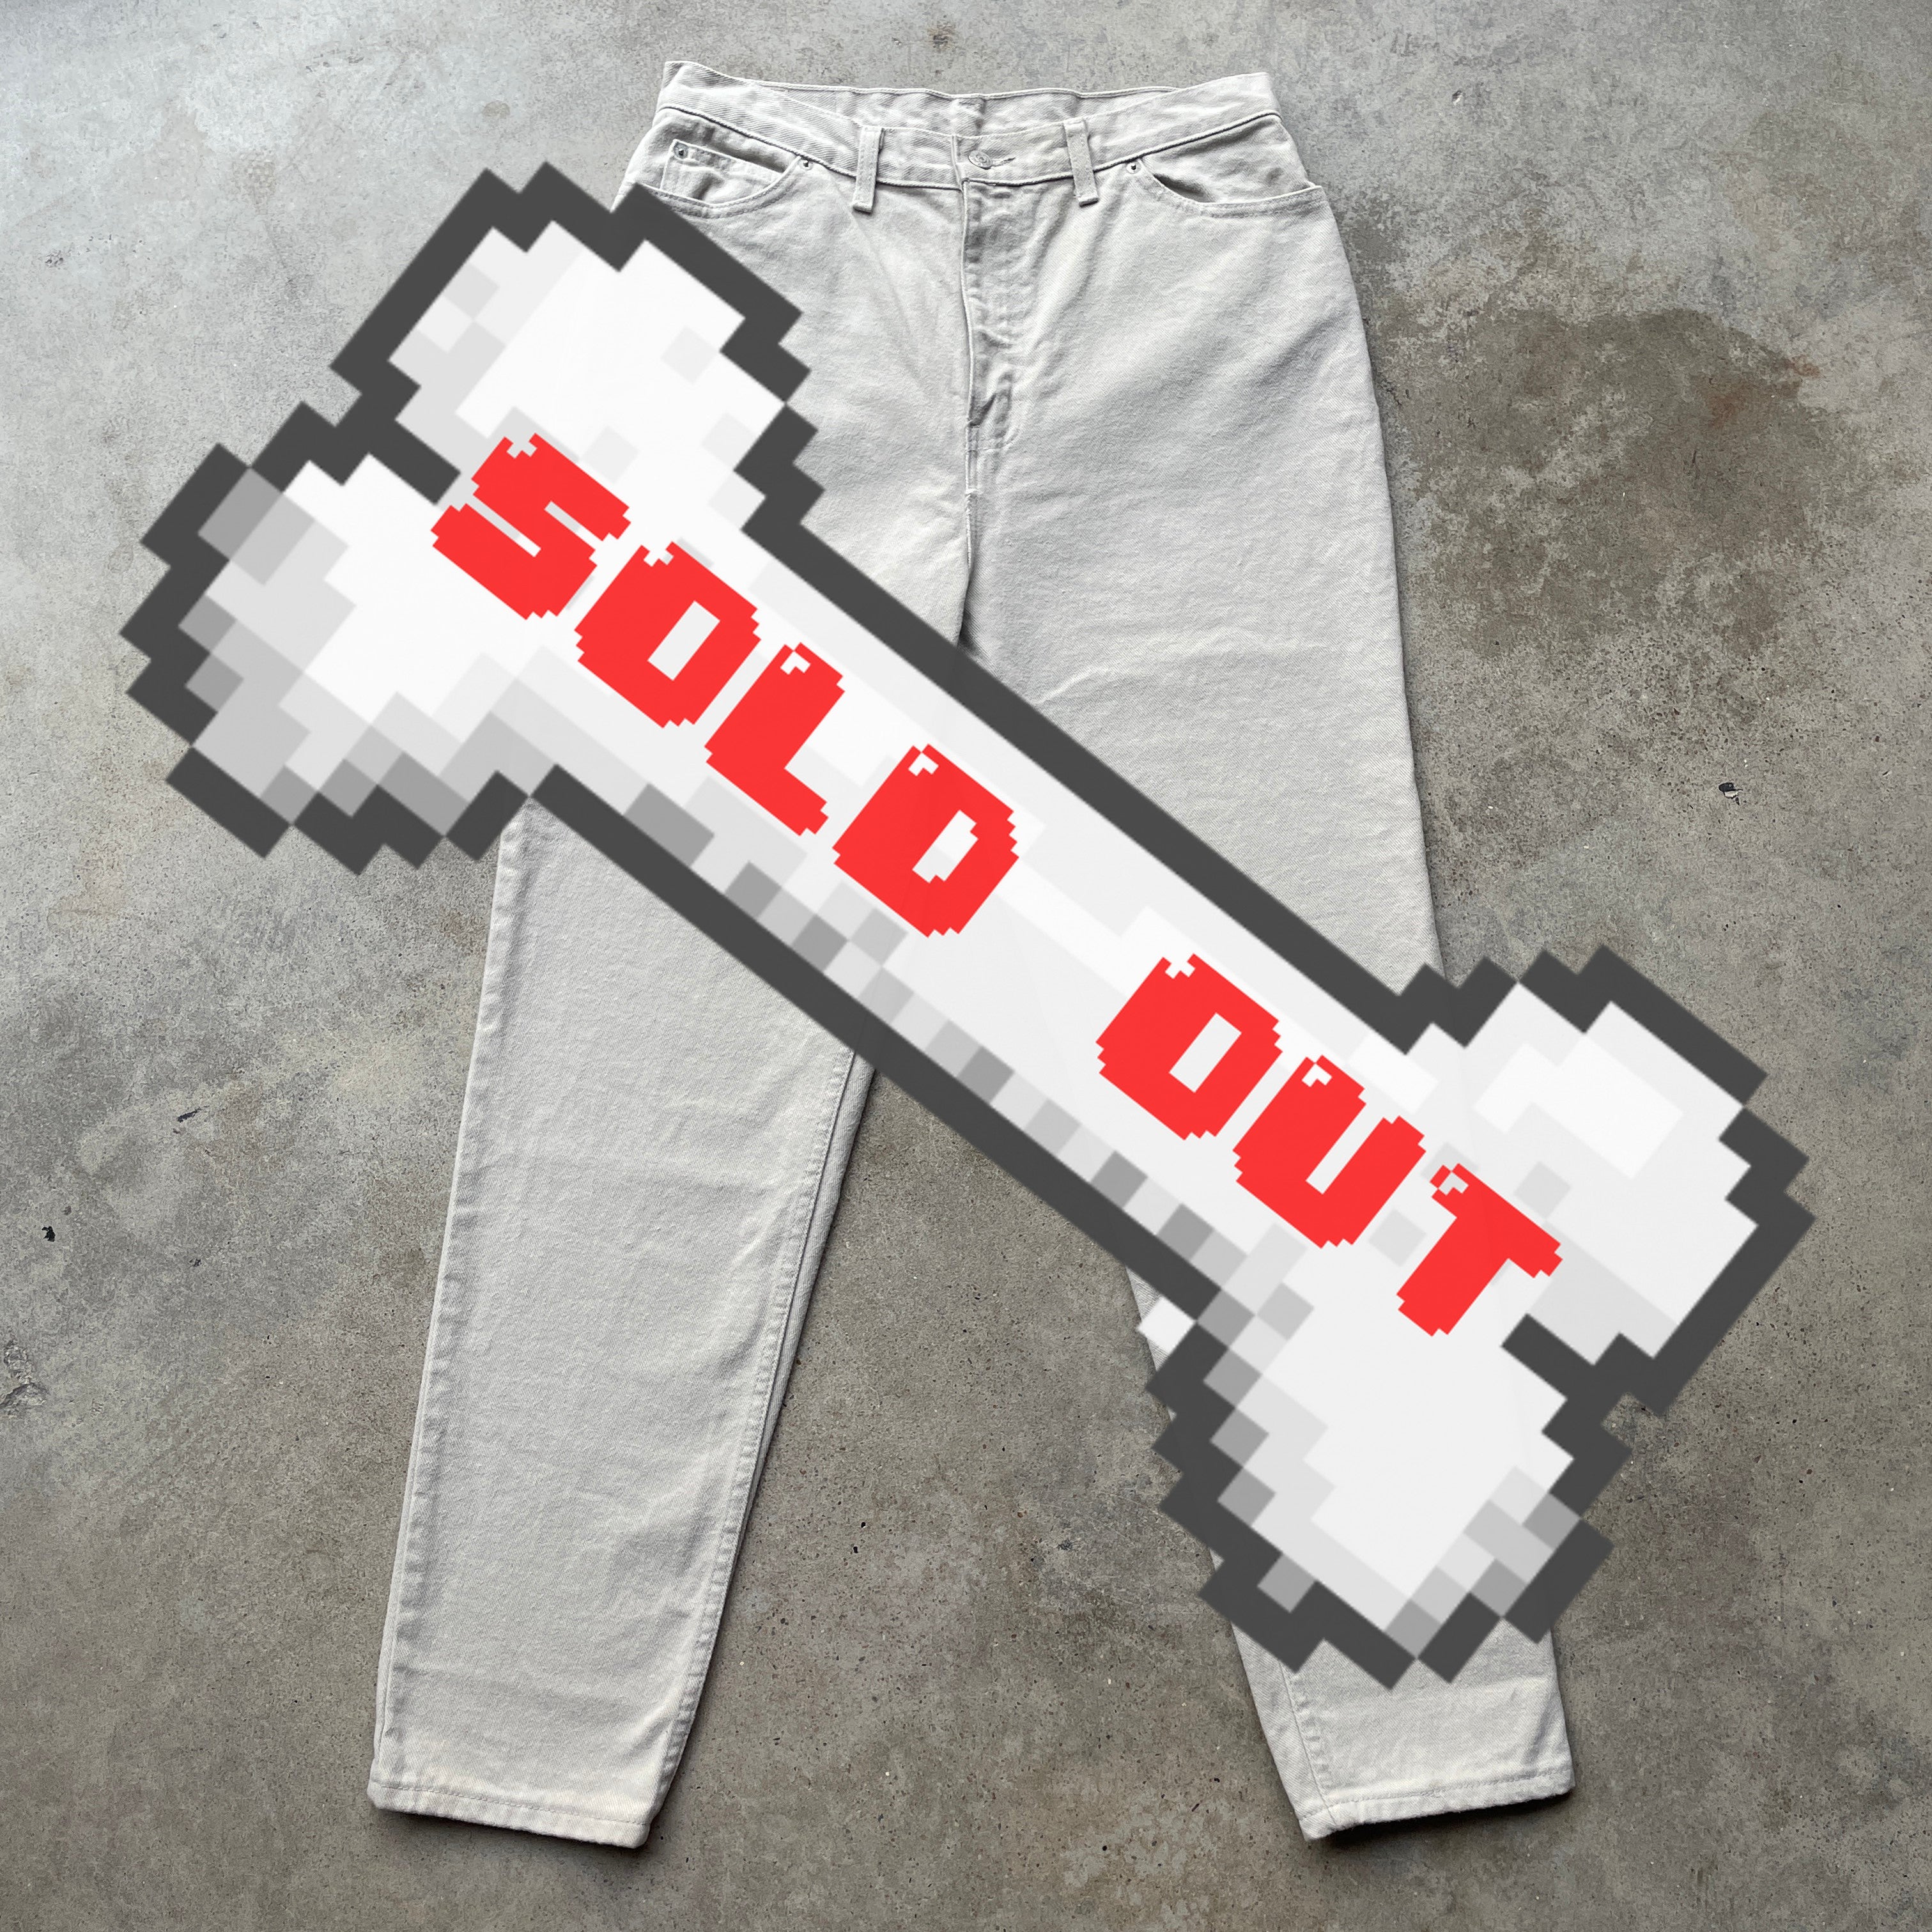 2000s Tan/Khaki “Faded Glory” Cotton Canvas Straight-Leg Pants